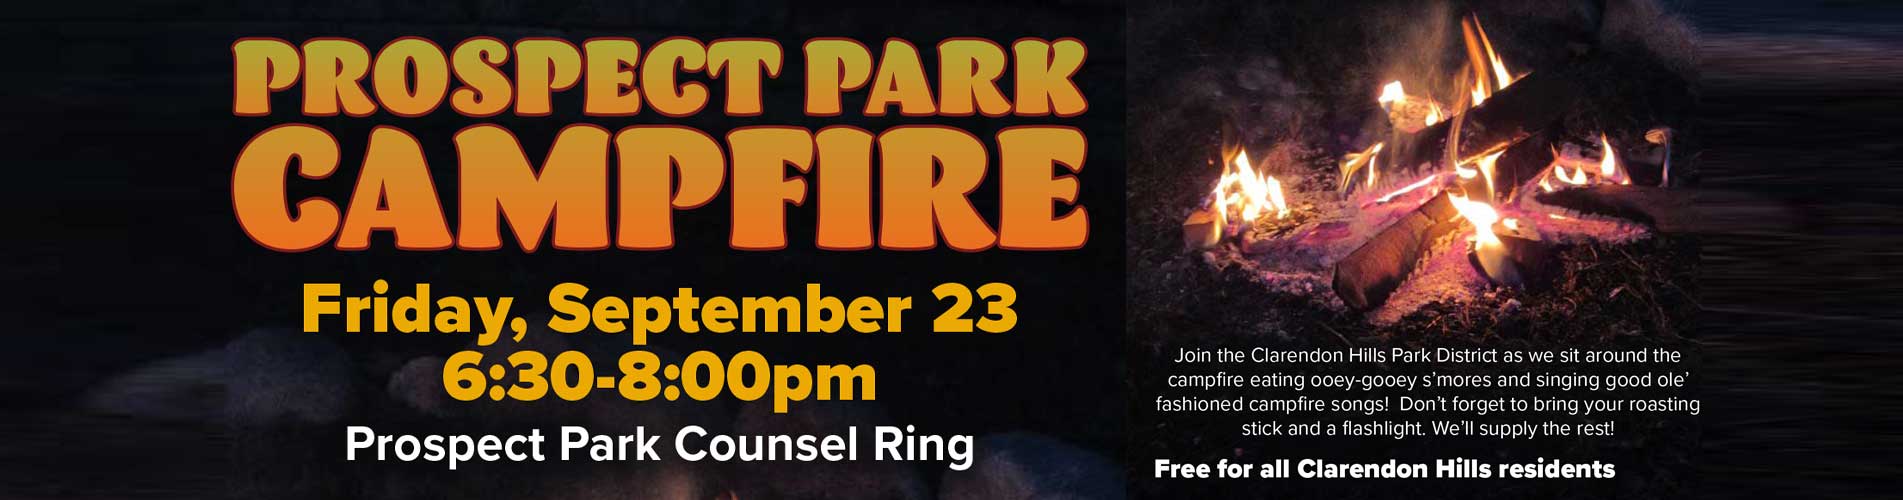 Prospect Park Campfire